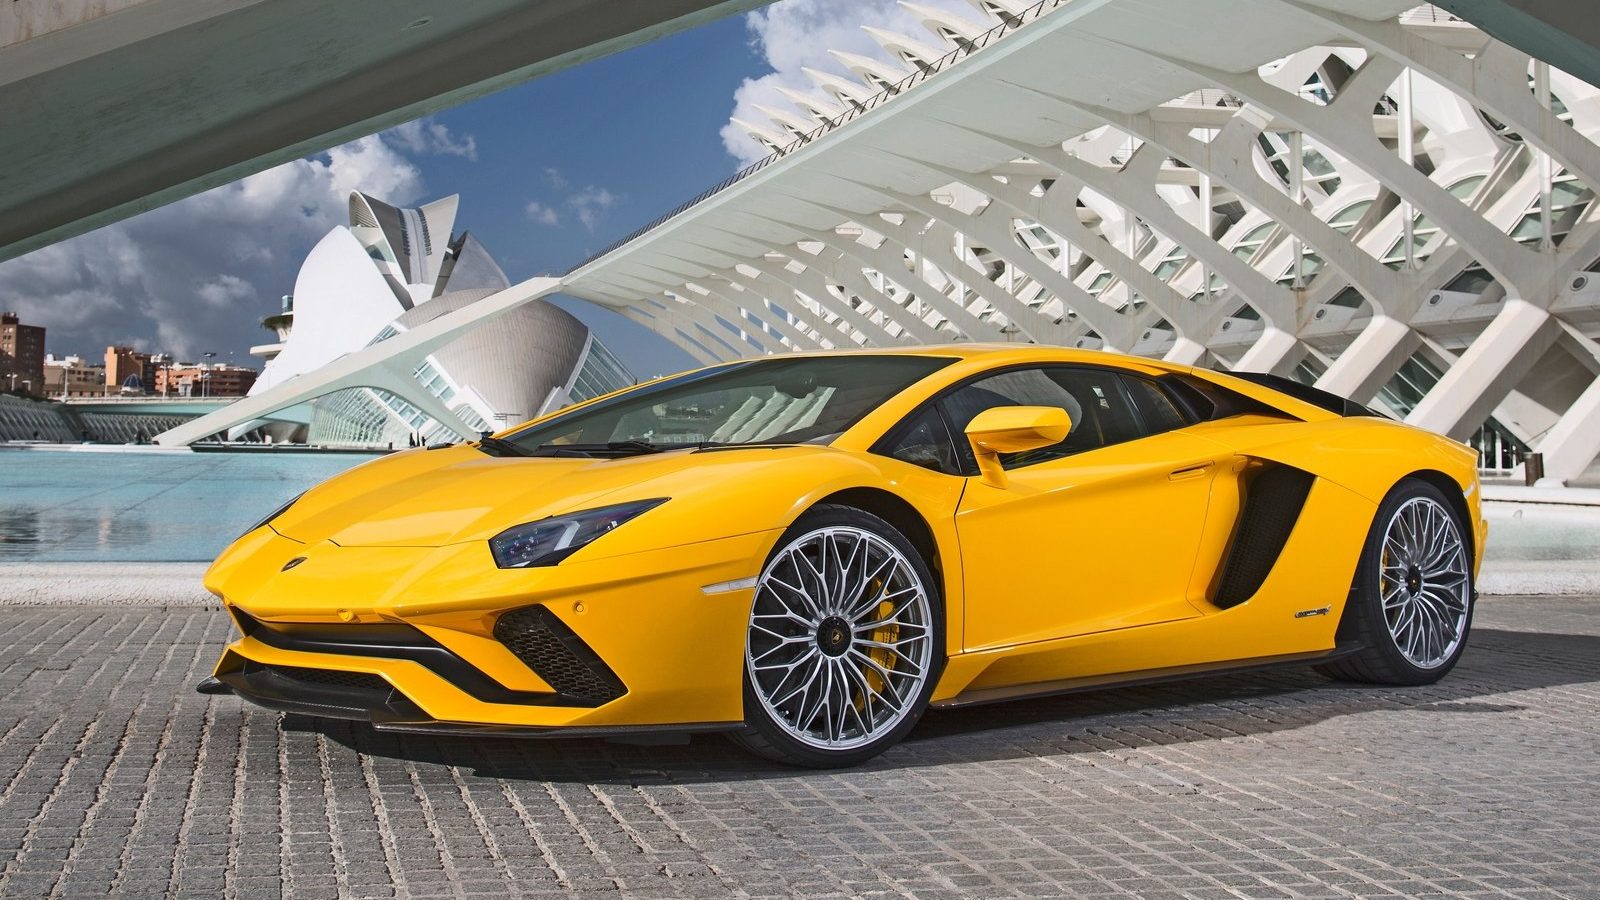 An image of a Lamborghini Aventador outdoors.